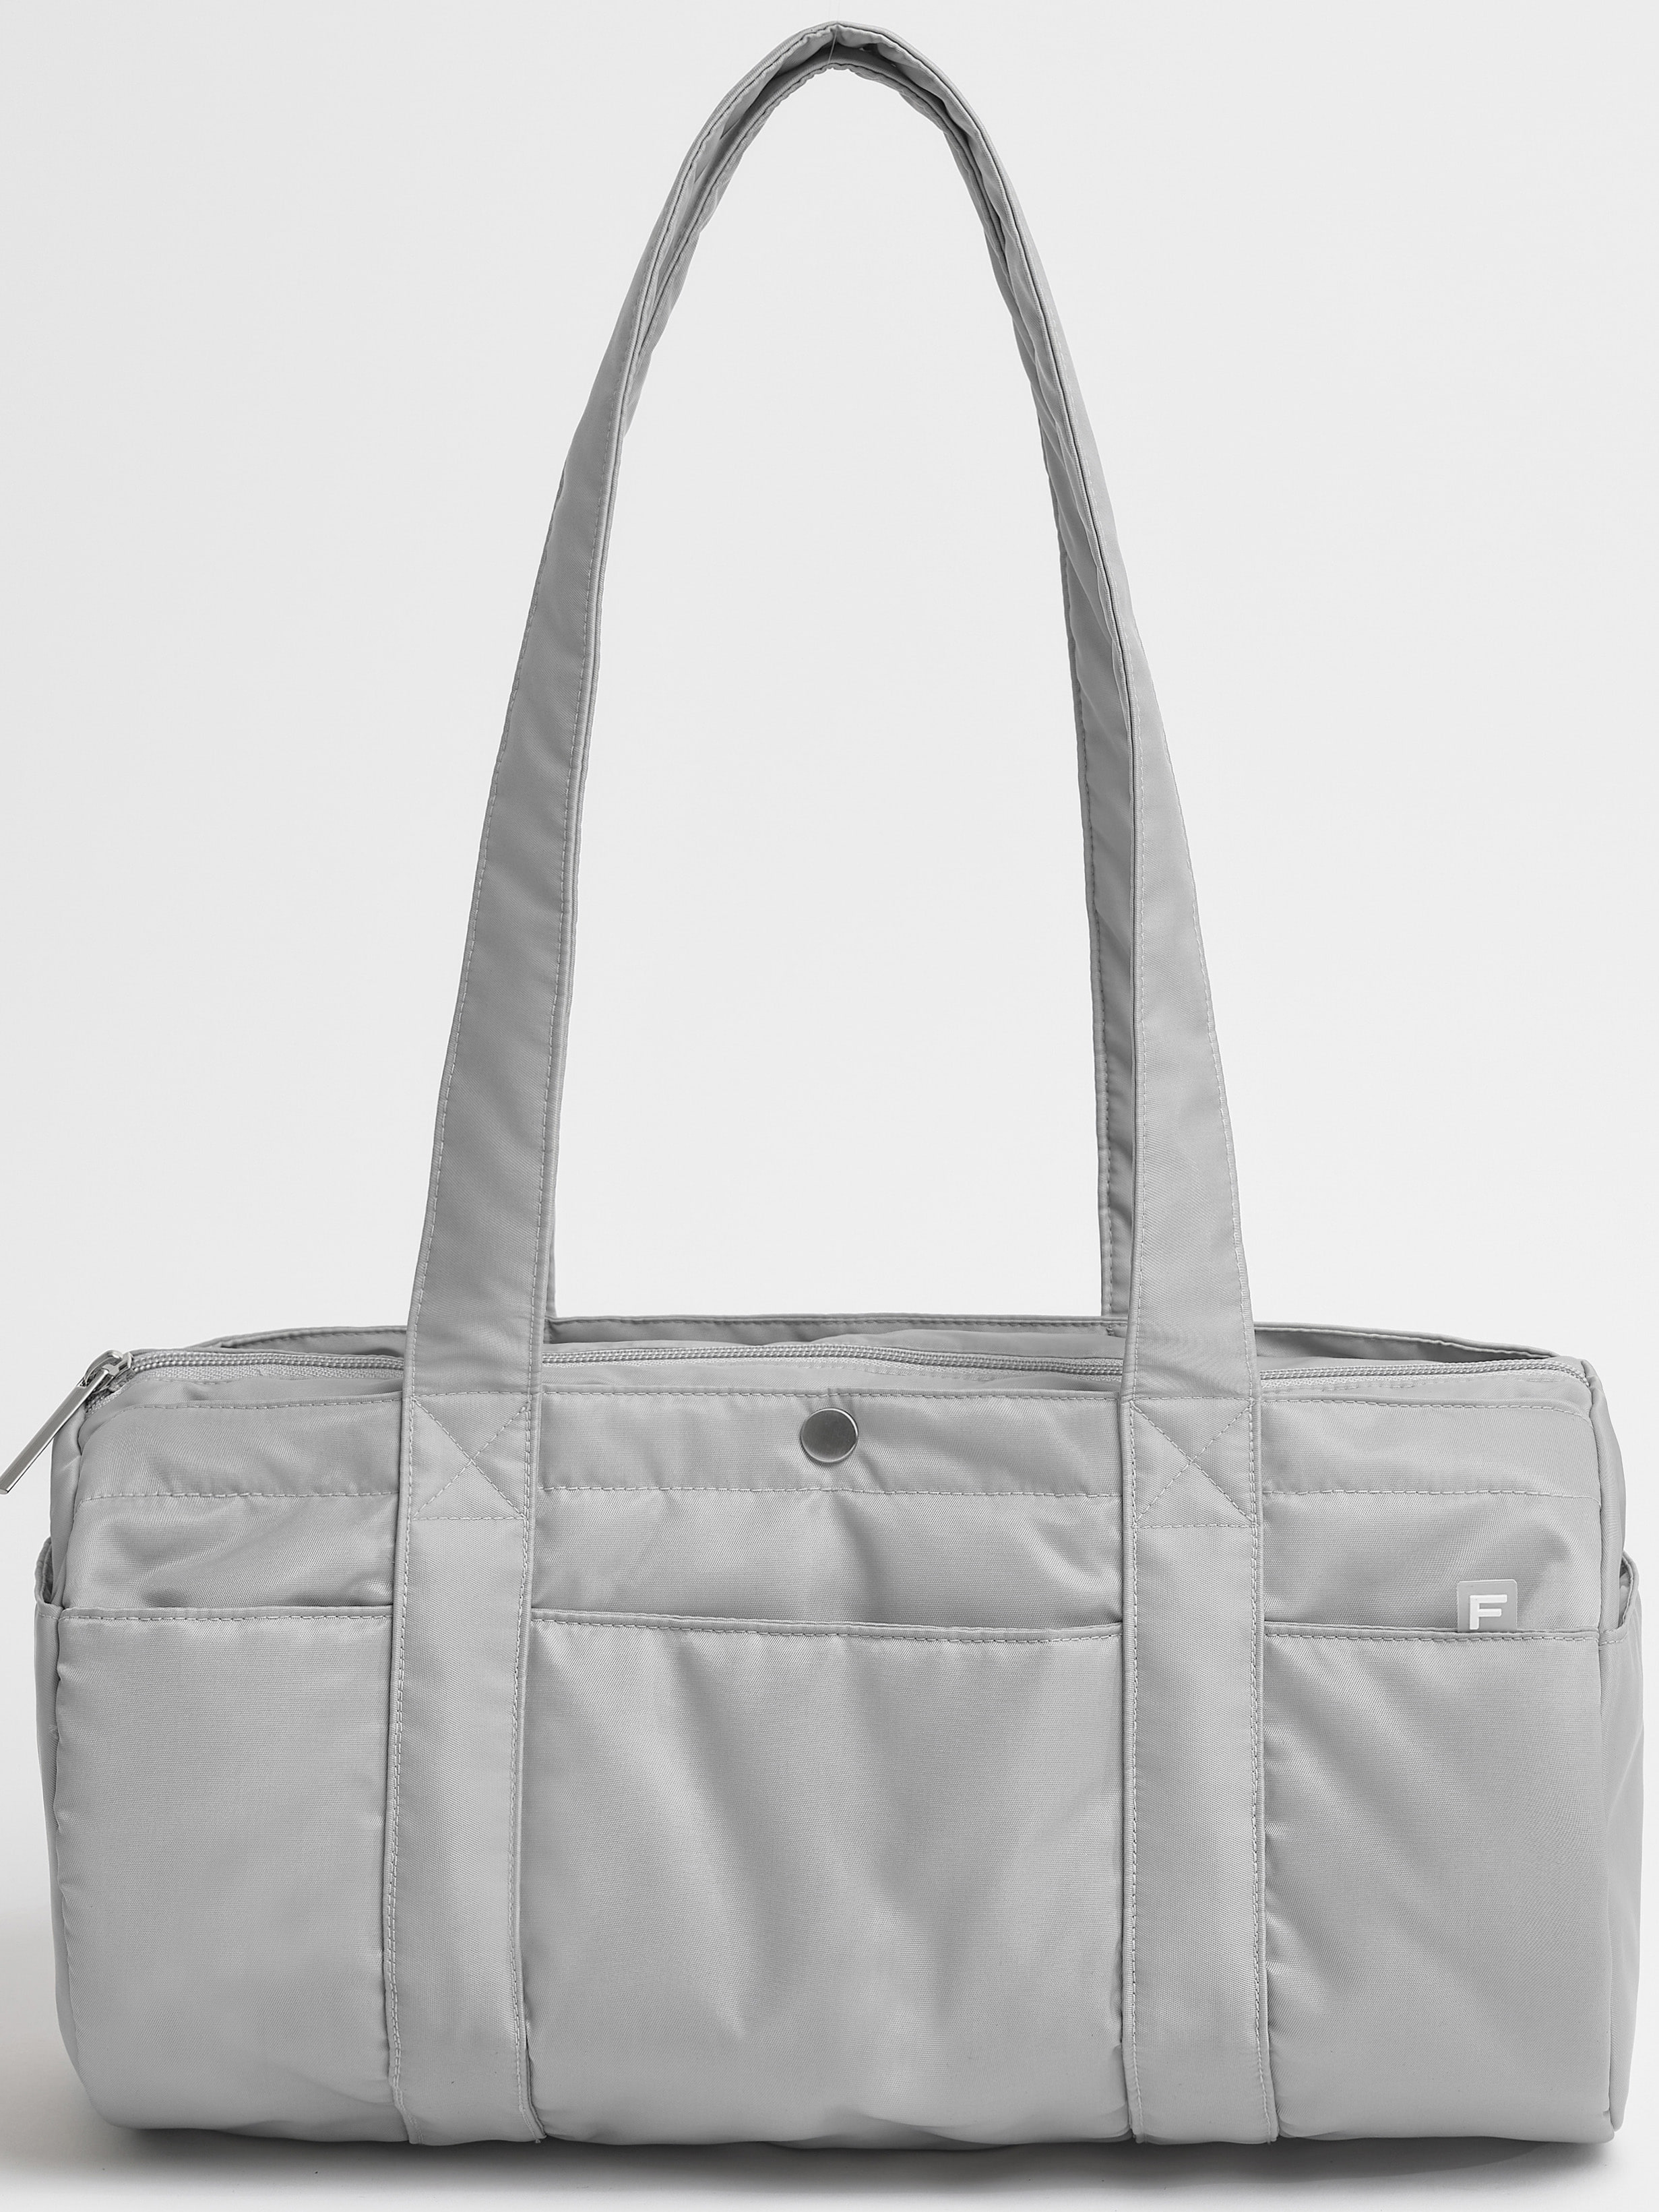 Vollo Sports Bag - Glace Grey